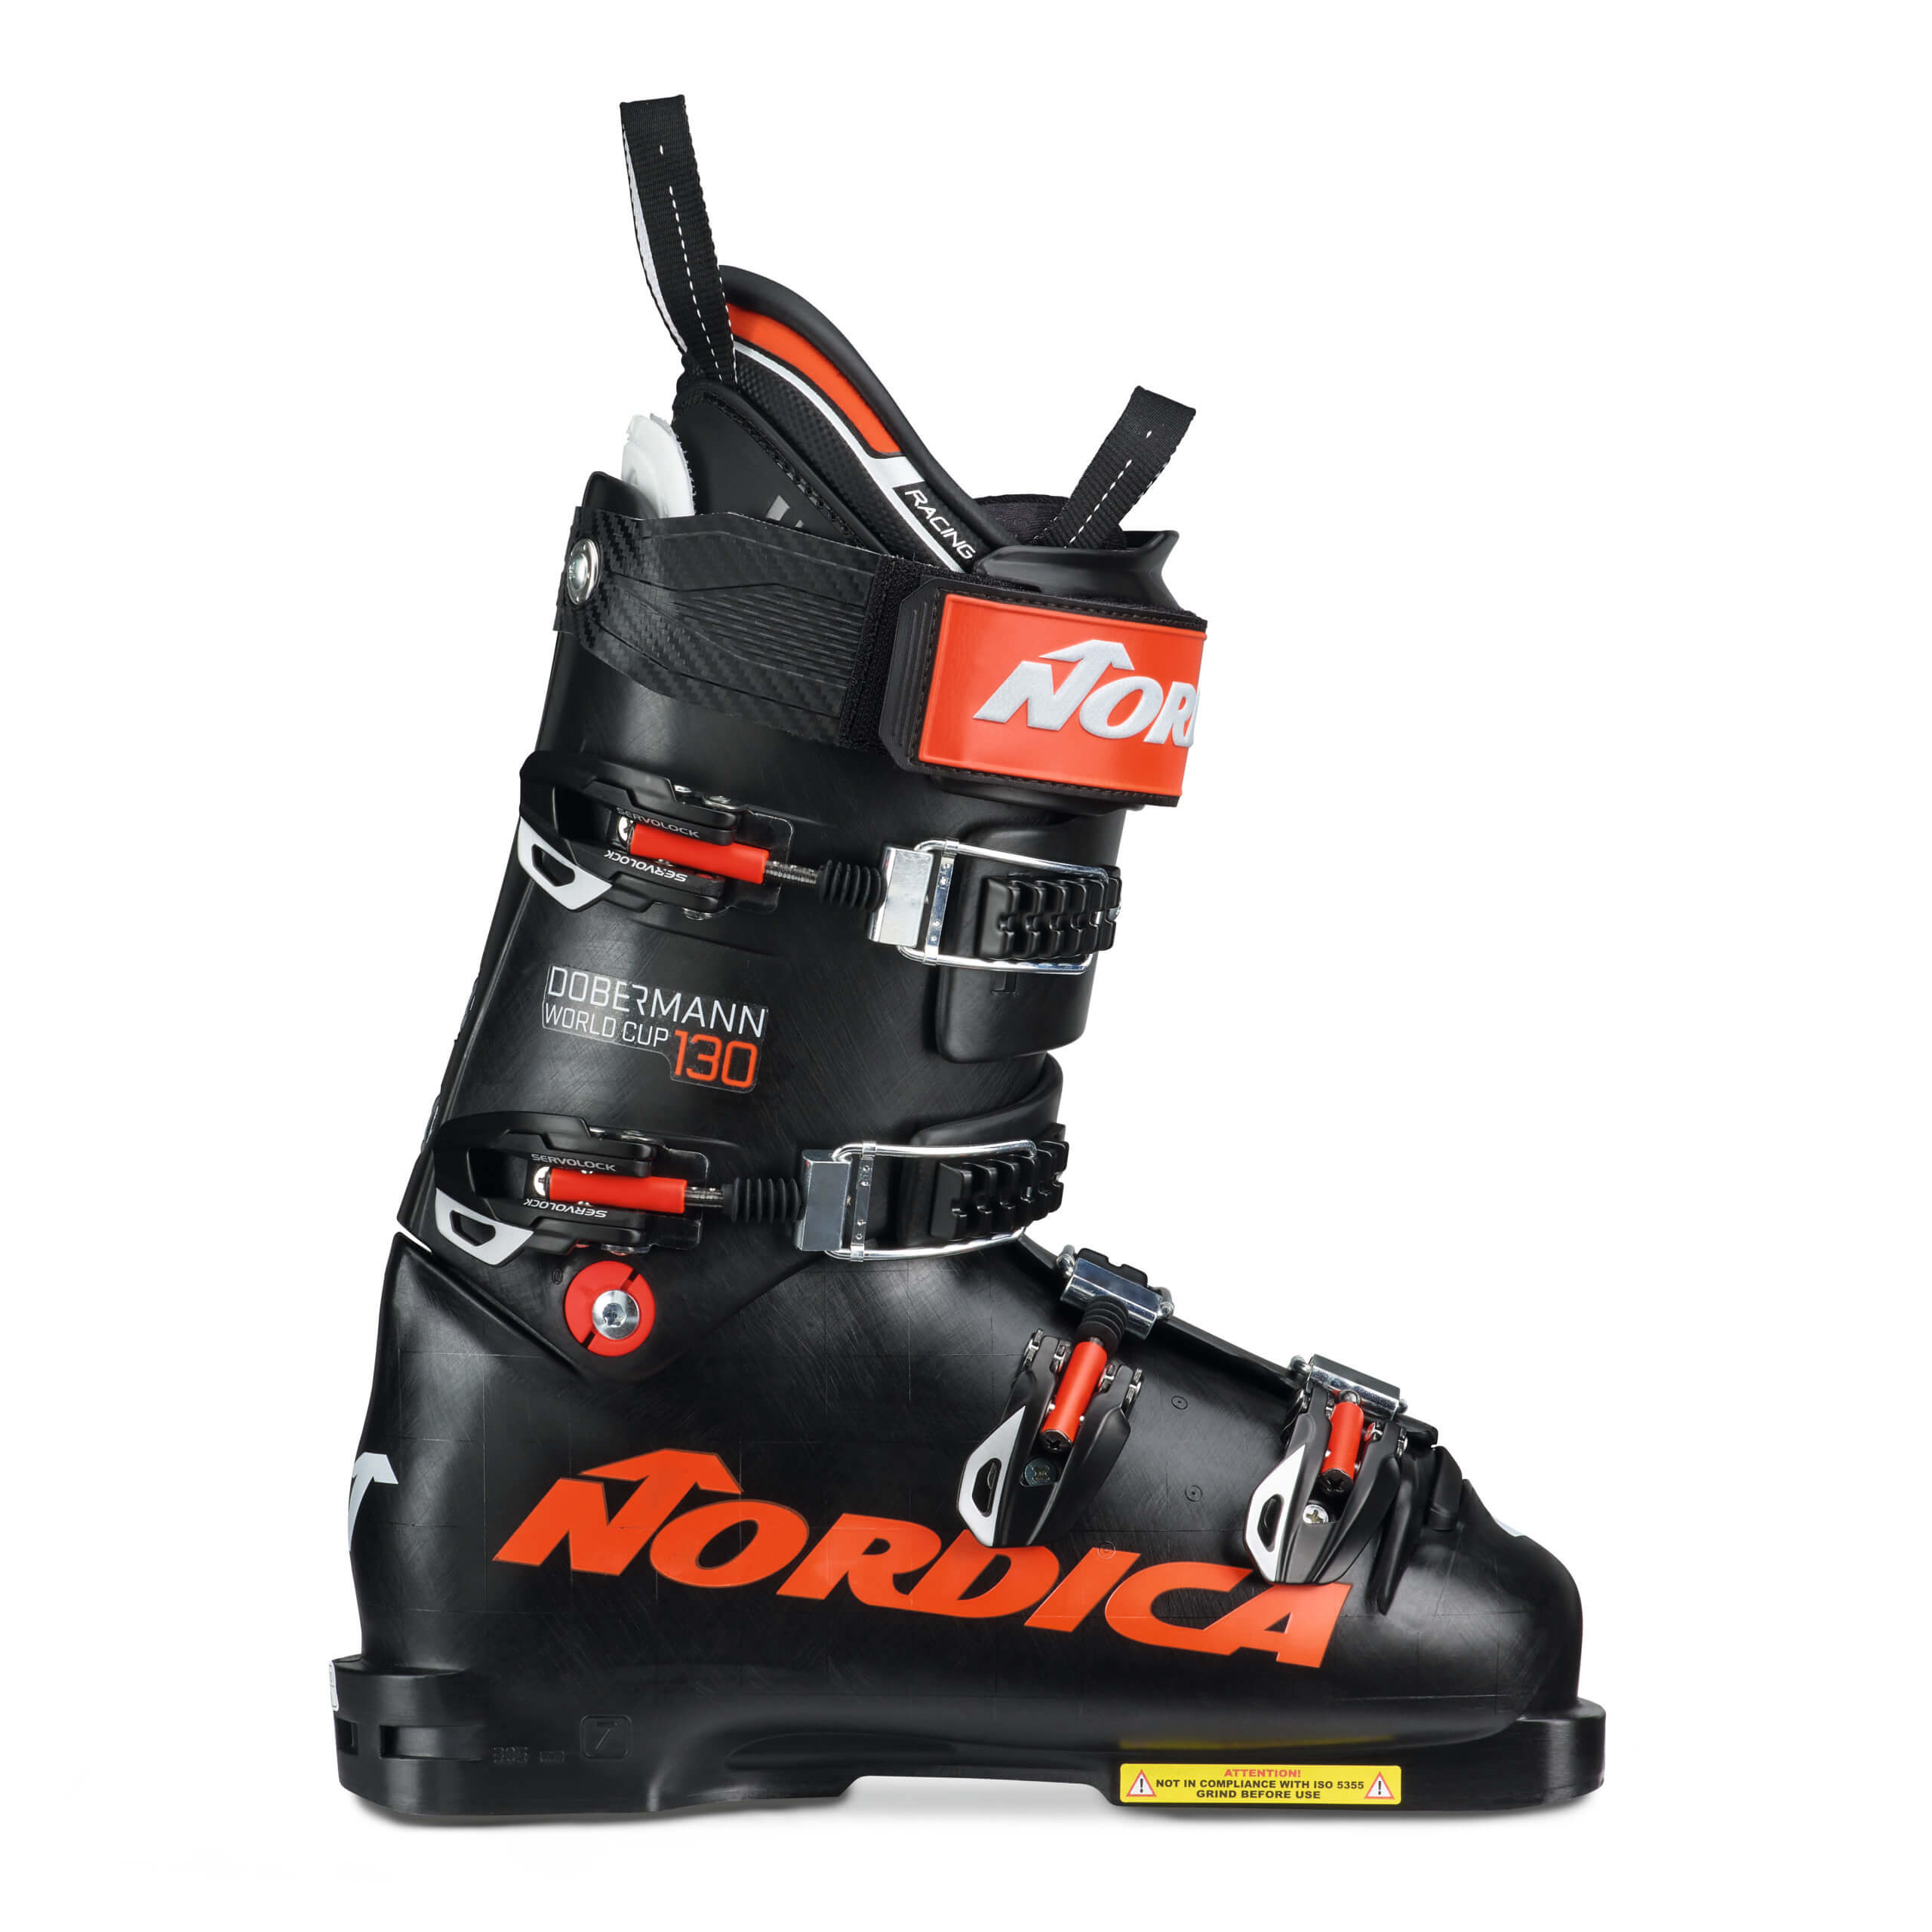 Nordica Dobermann WC EDT 130 Ski Boots 2021 - The Boot Pro